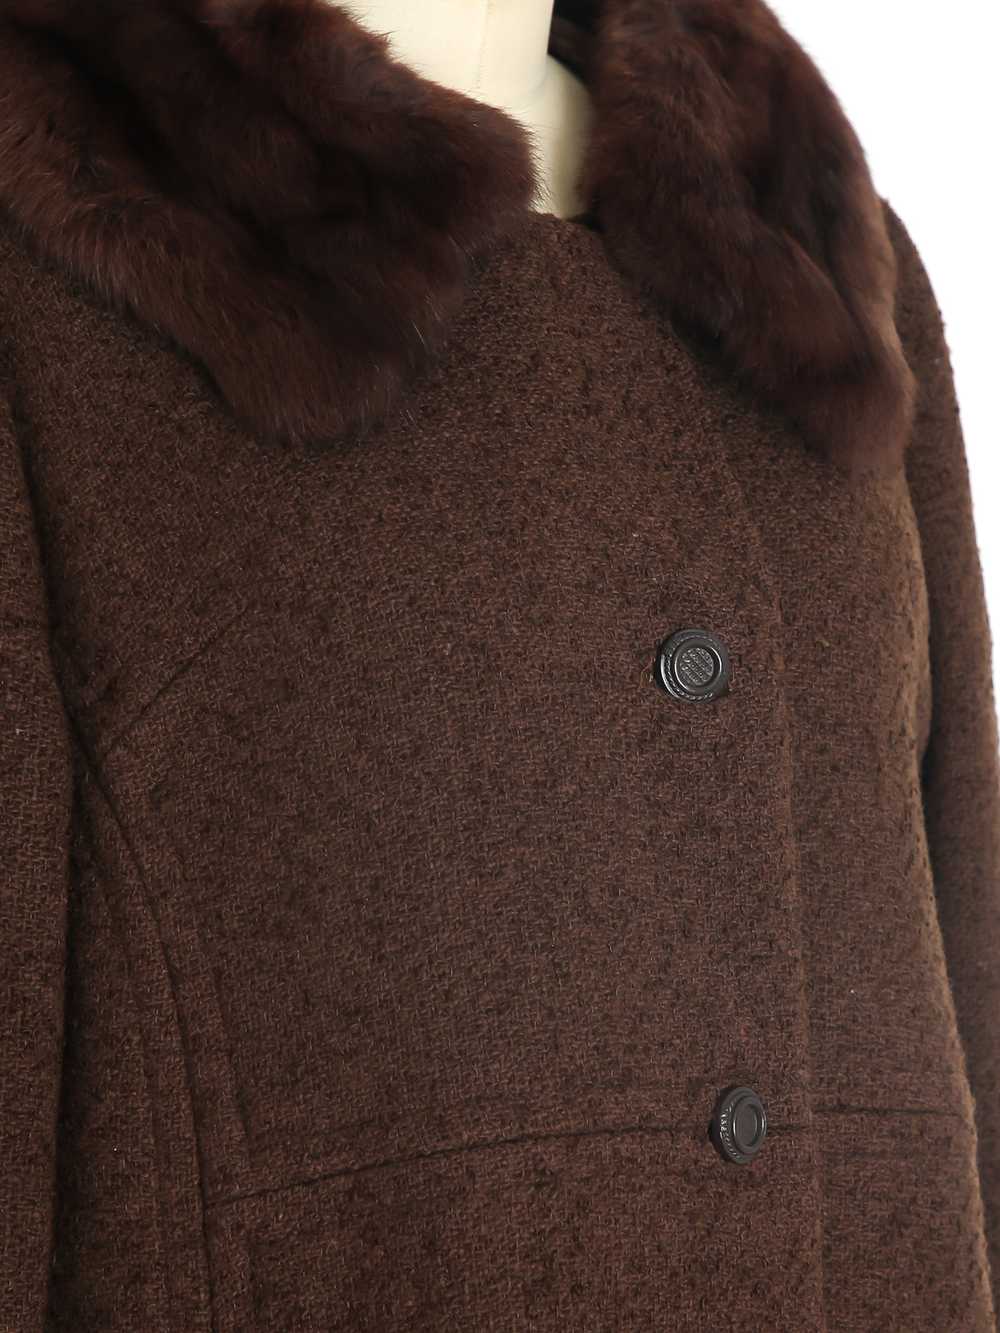 1960's Tweed Jacket with Fur Collar - image 2